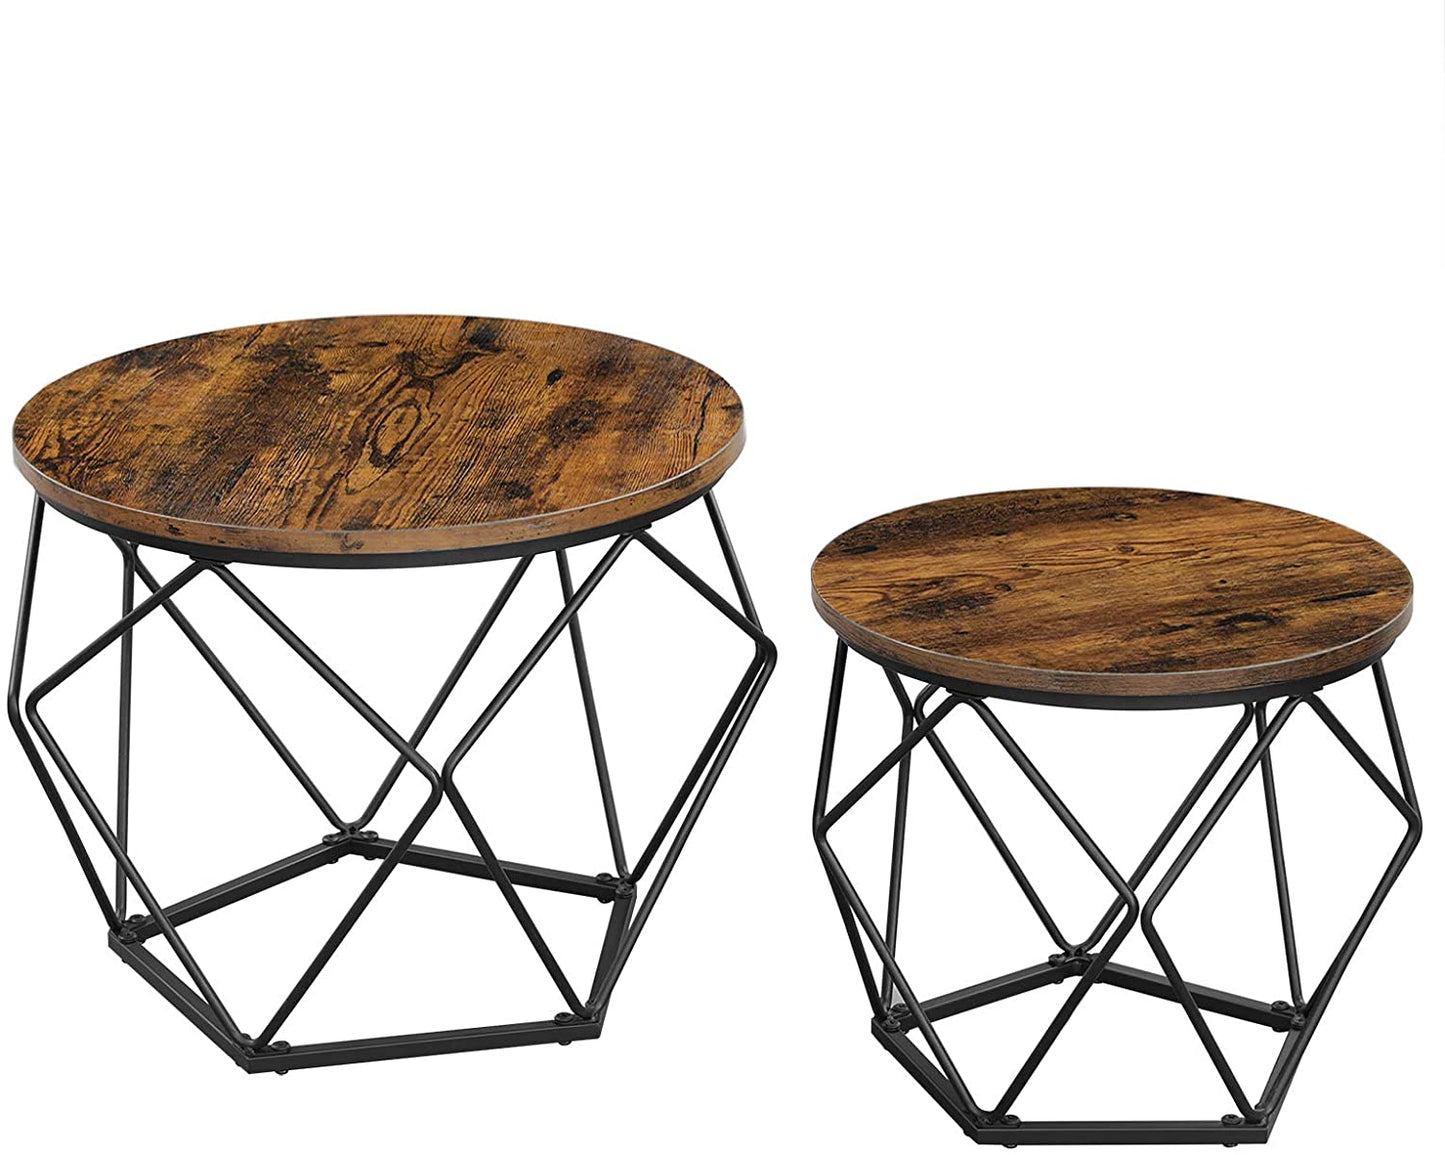 Set of 2 Side Tables Robust Steel Frame Rustic Brown and Black